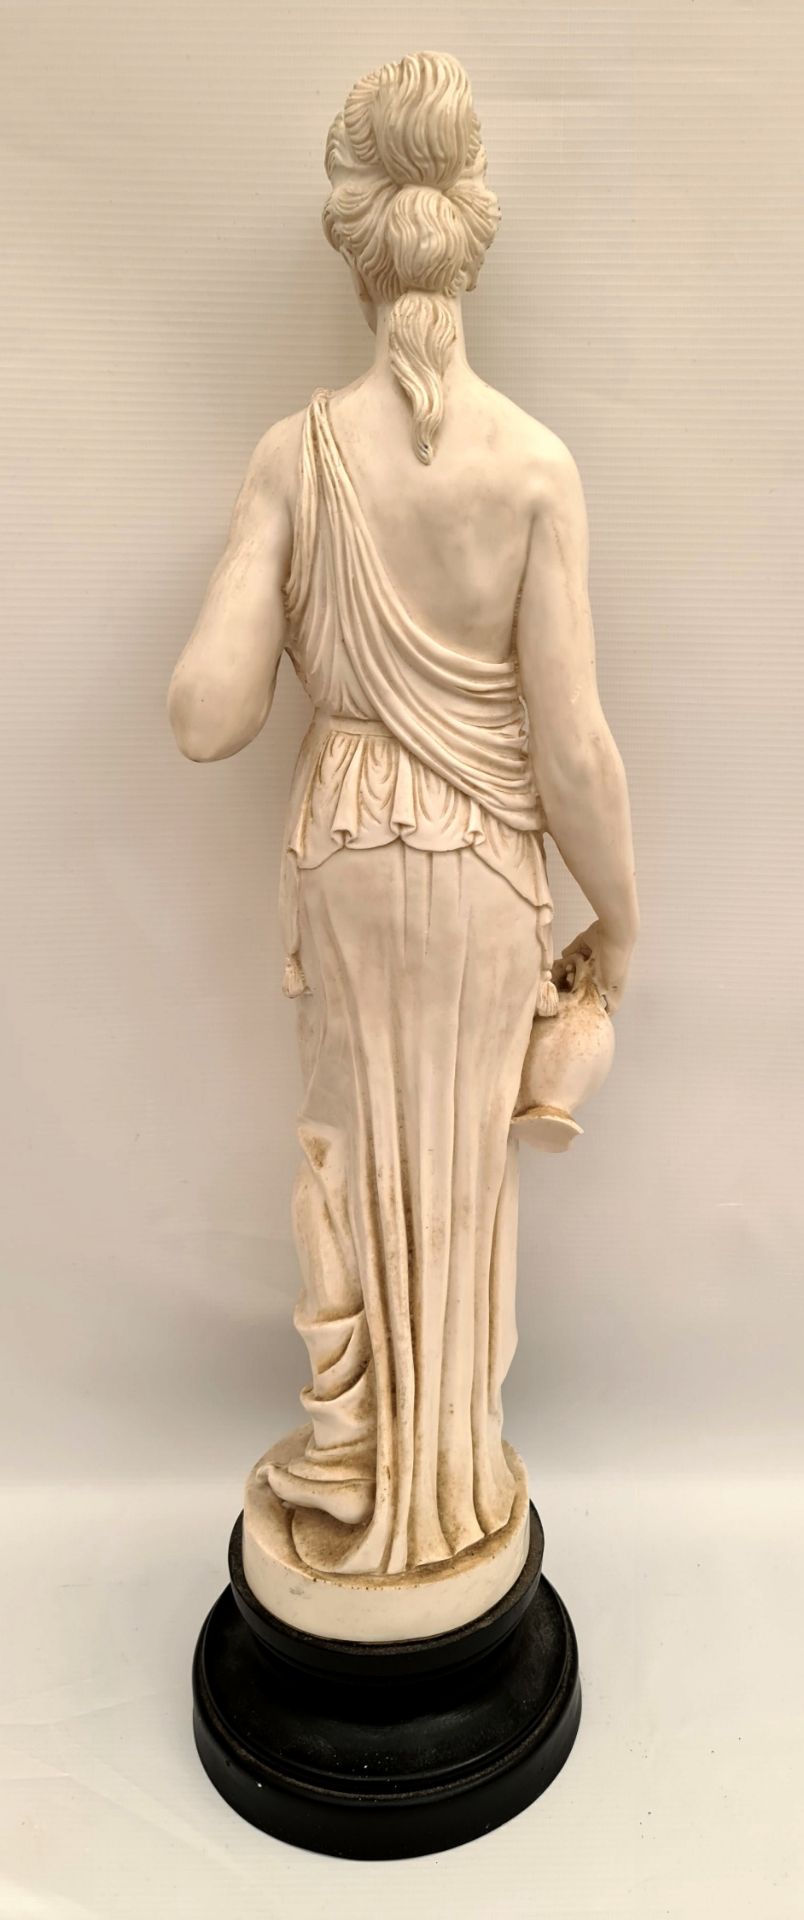 Vintage Sculpture Greco Roman Style Figure 25 Inches Tall Vintage Sculpture Greco Roman Style Figure - Image 2 of 2